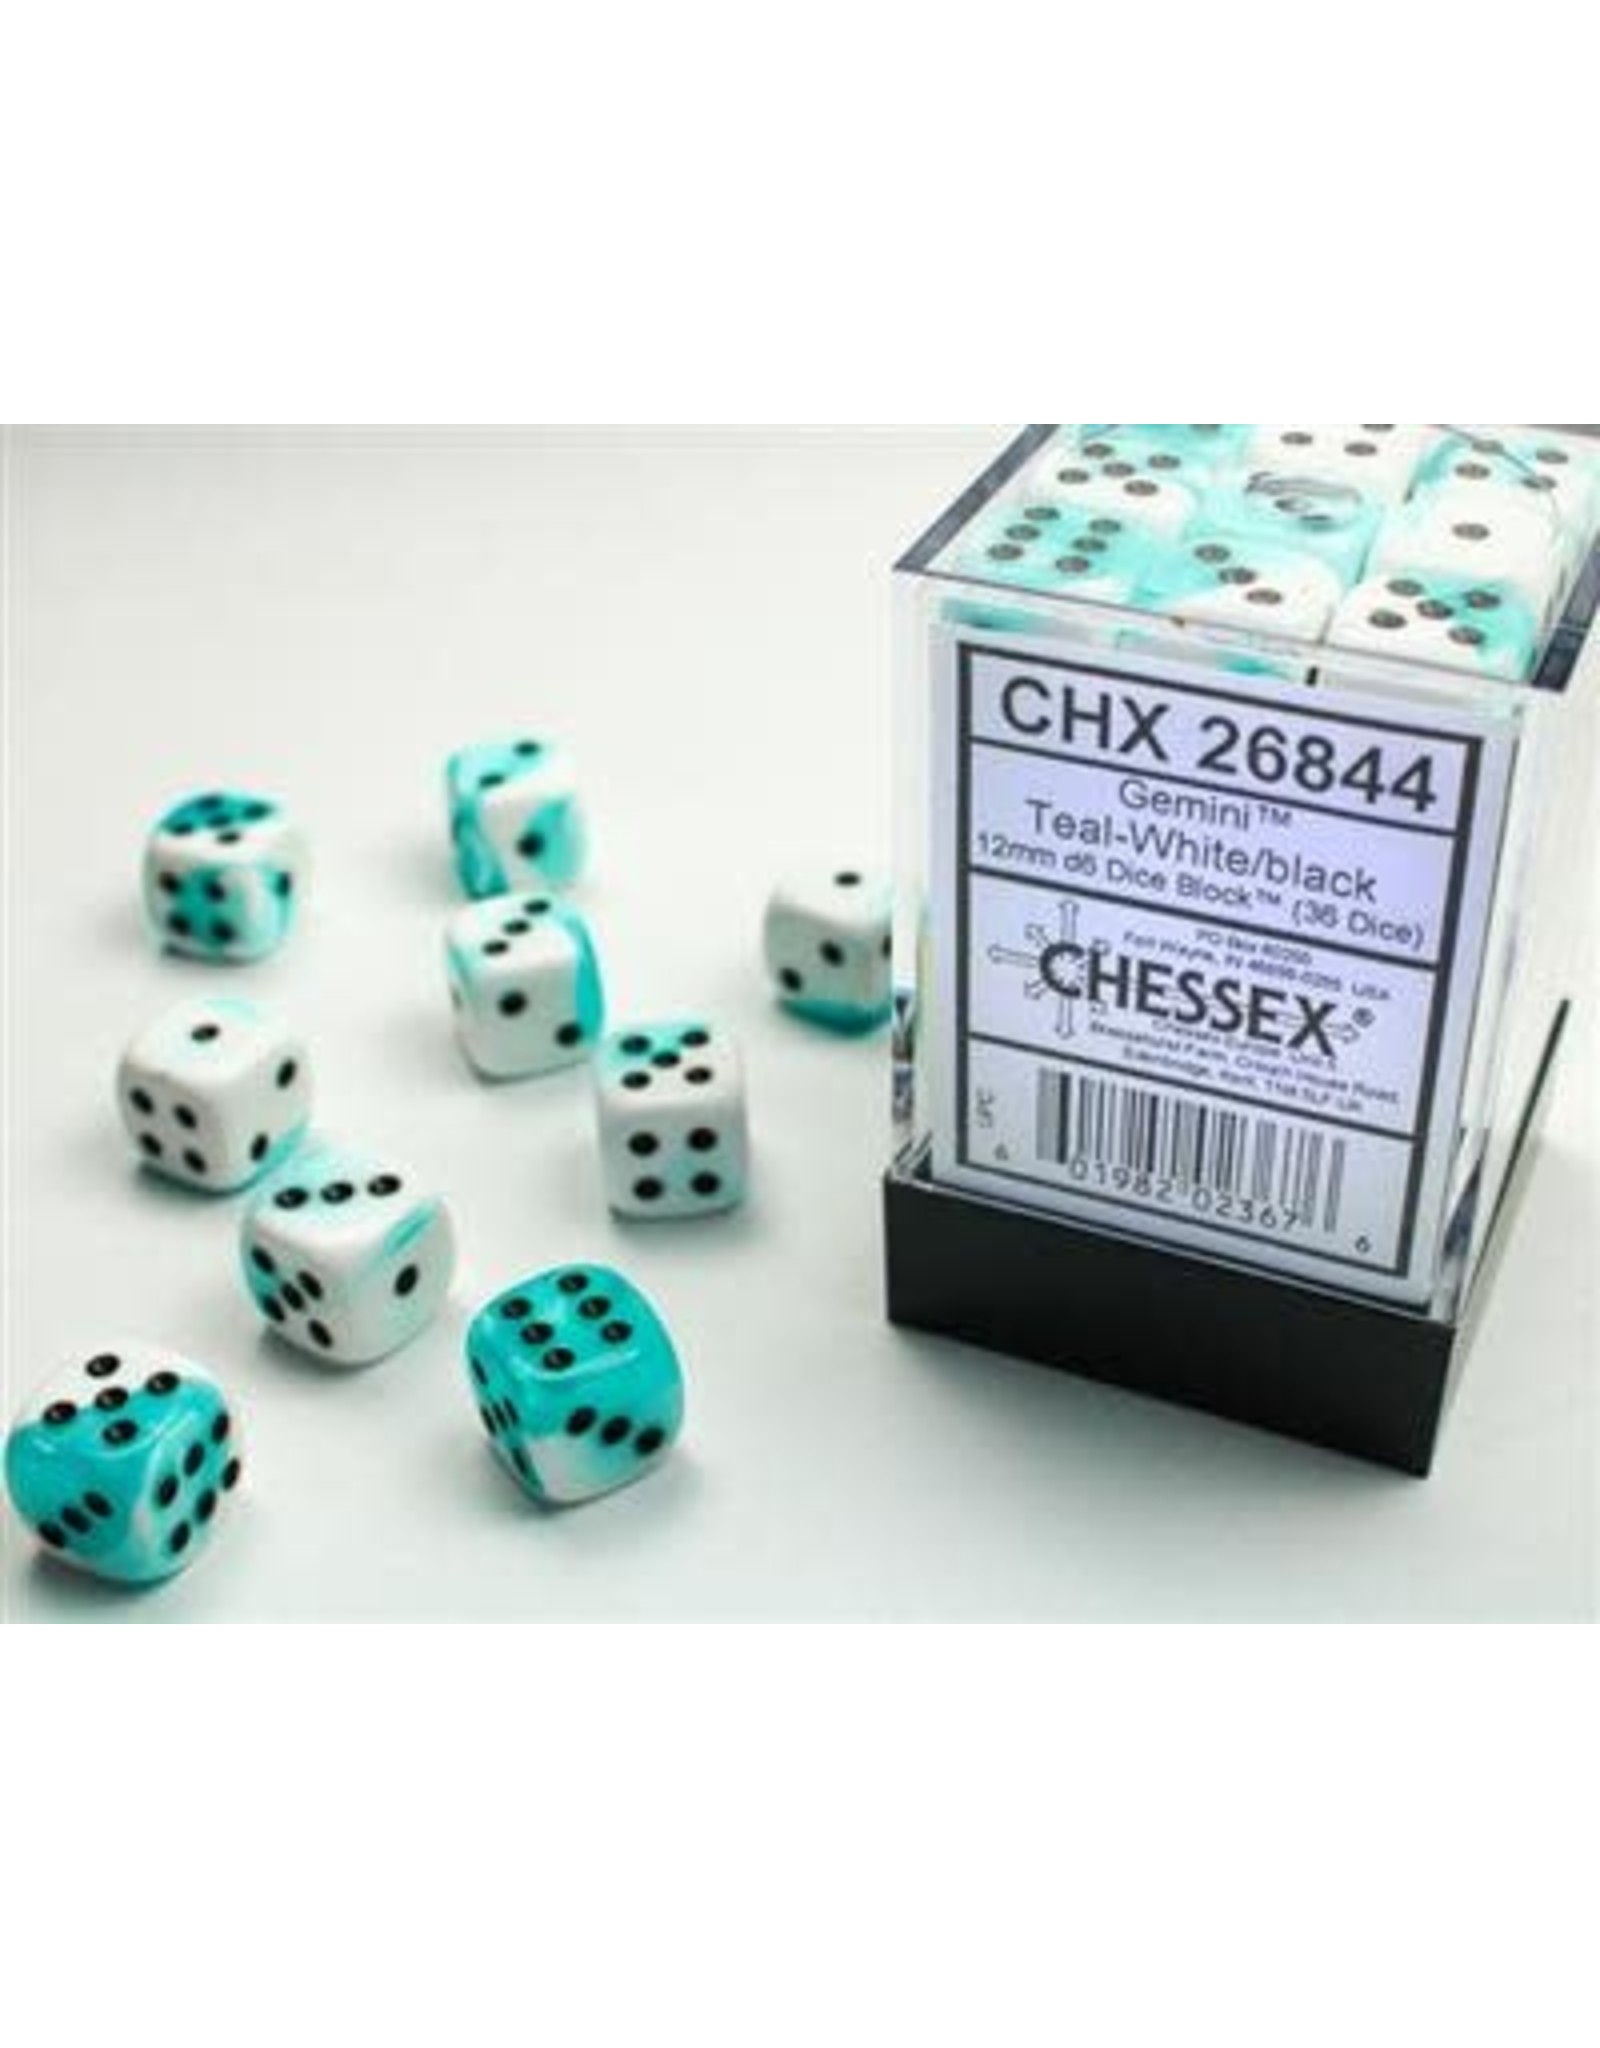 Chessex Gemini 12mm d6 Teal-White/black Dice Block (36 dice)